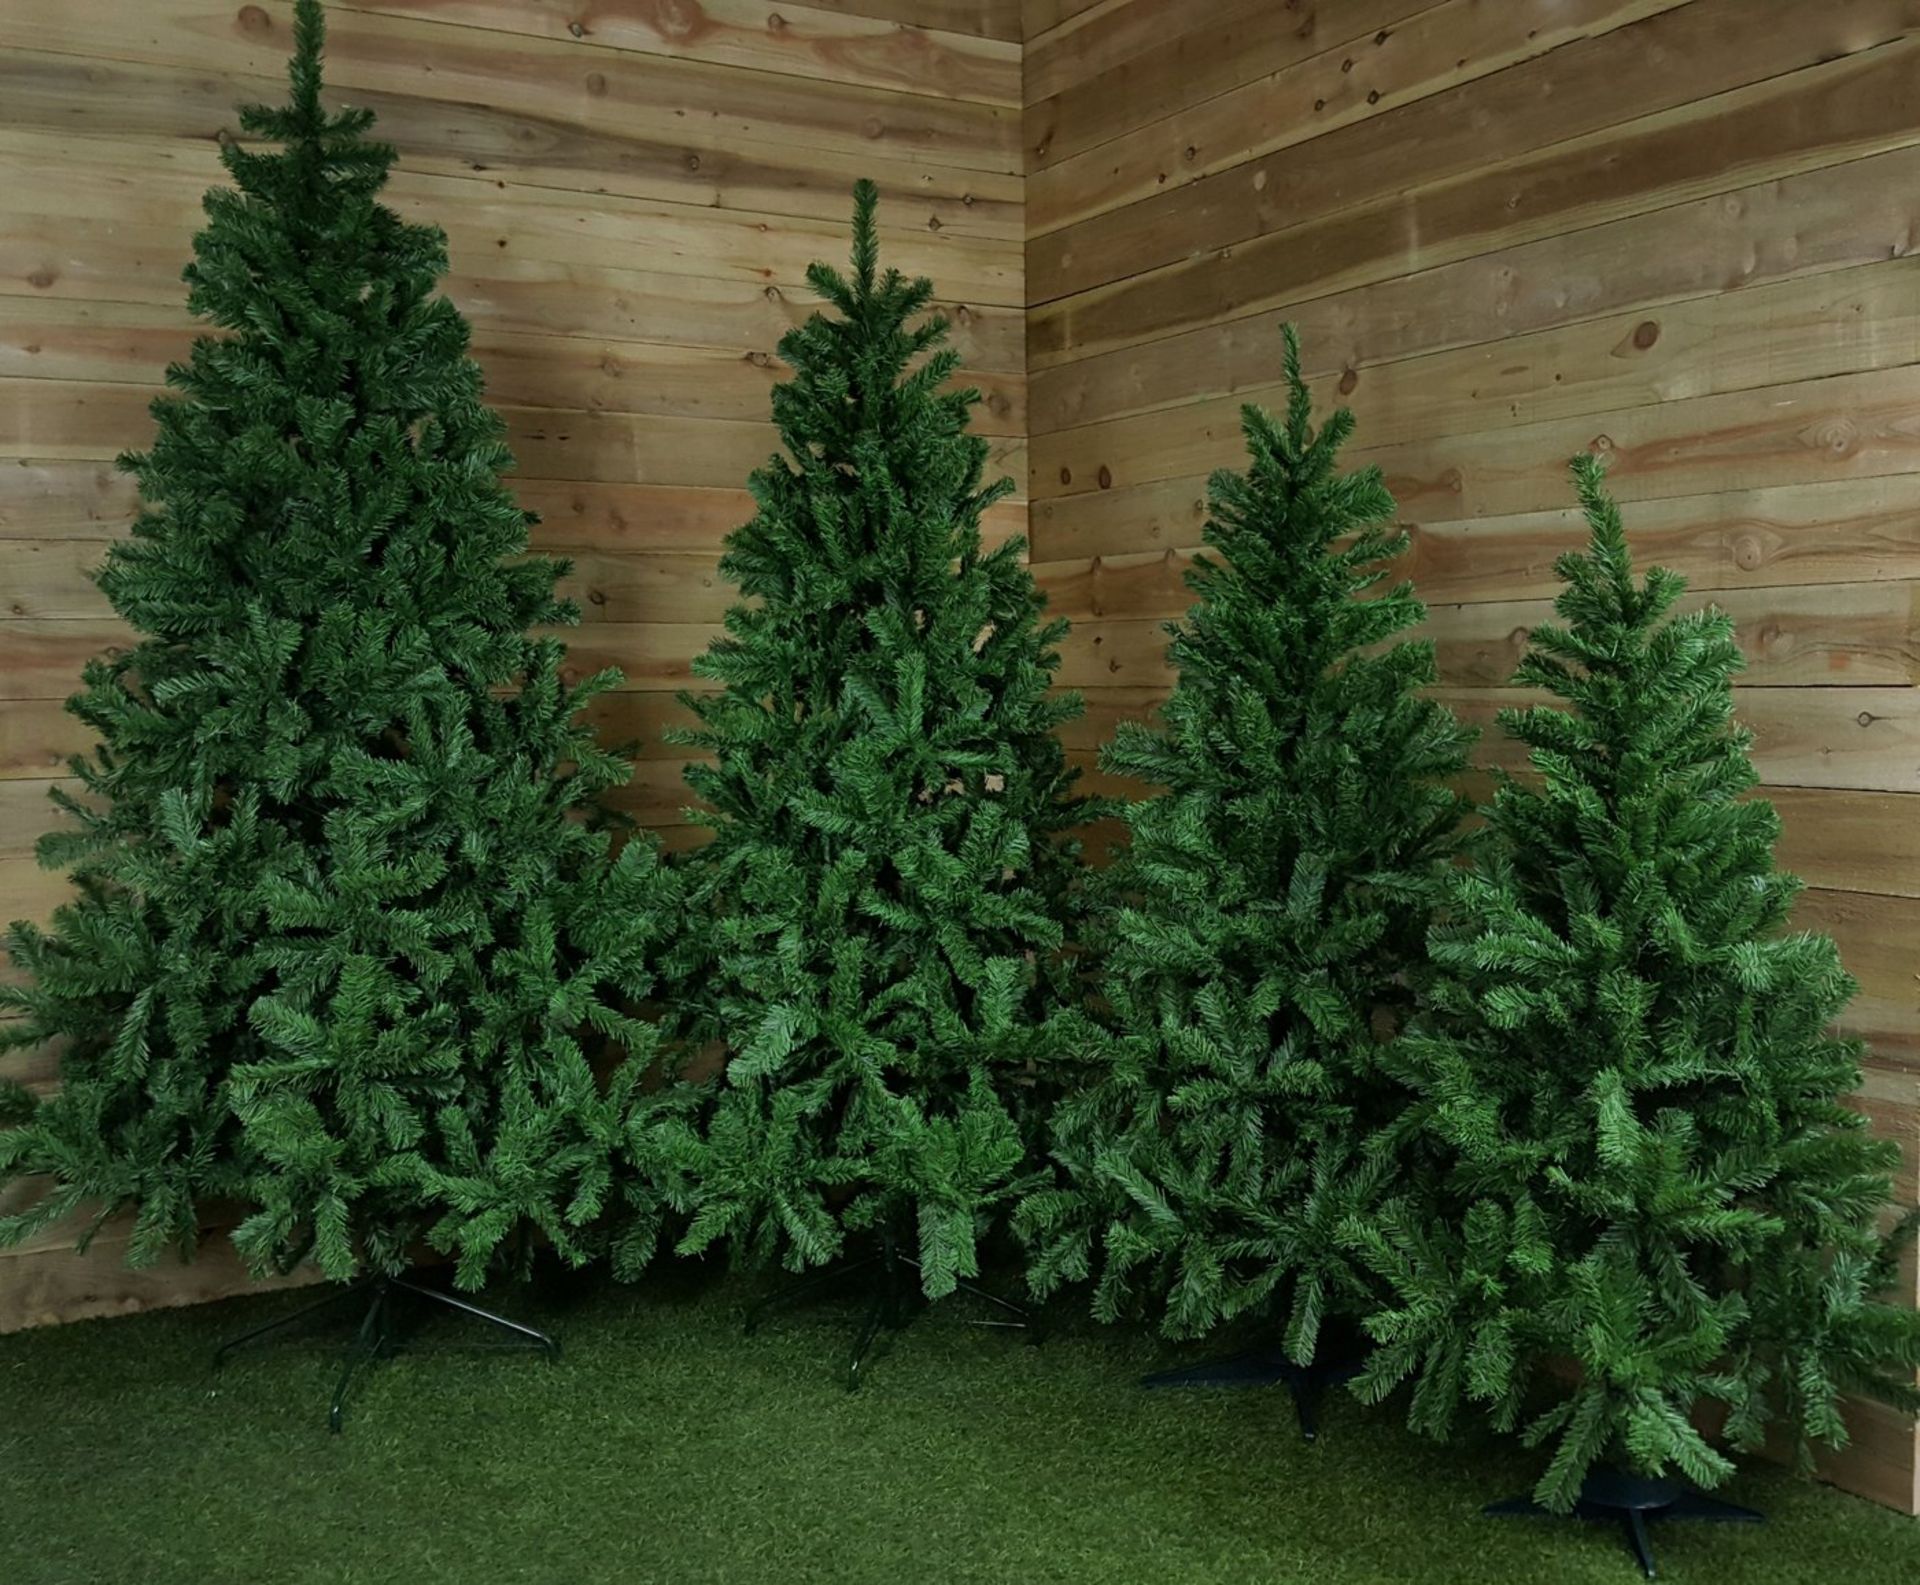 V Brand New Fantastic Quality Huge 7ft Green Spruce Effect Christmas Tree - Online Price £80.00 (